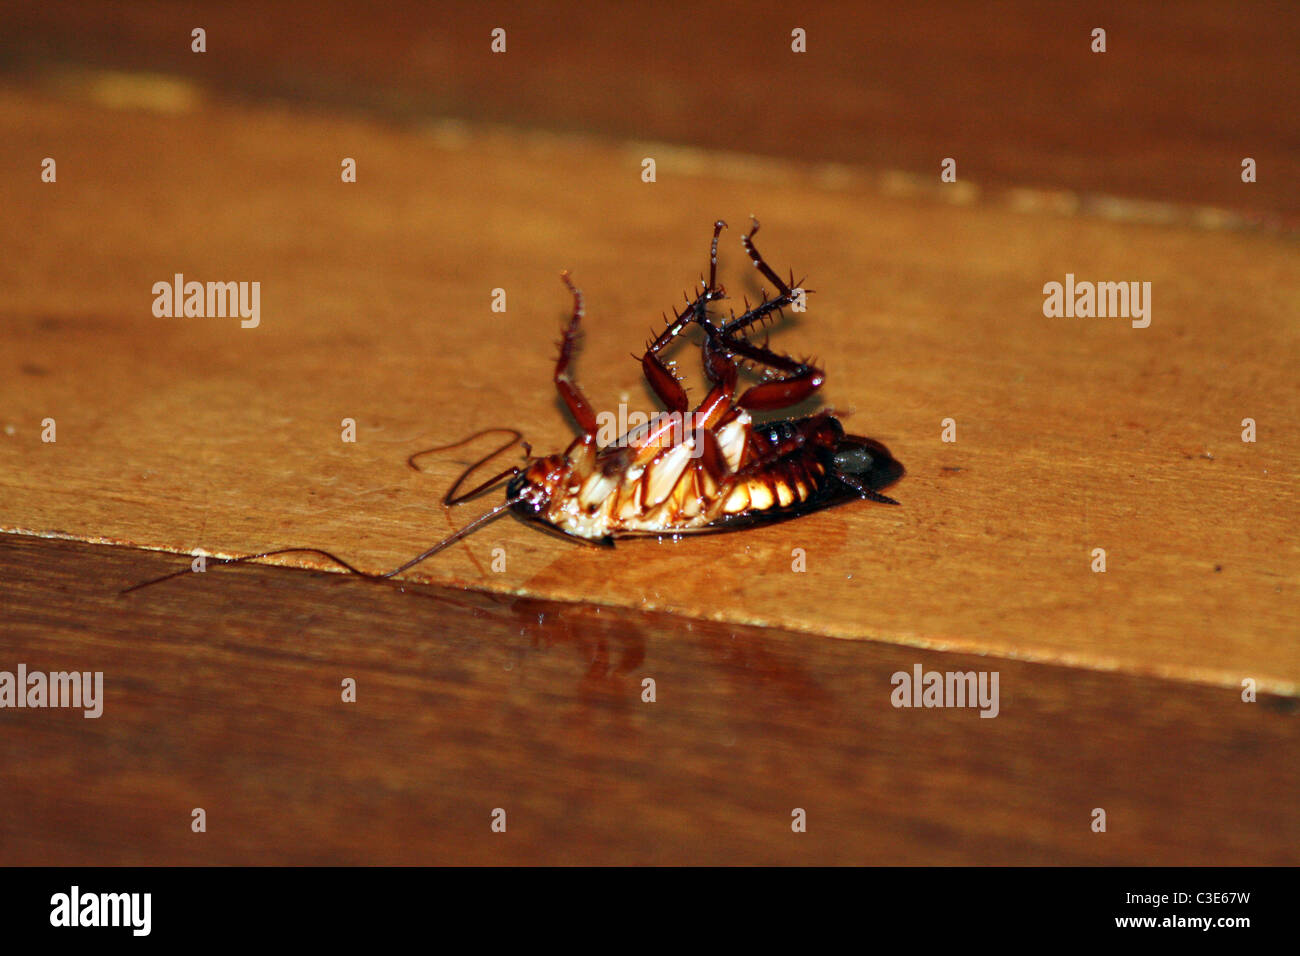 Dead cockroach on a wooden floor, Australia Stock Photo